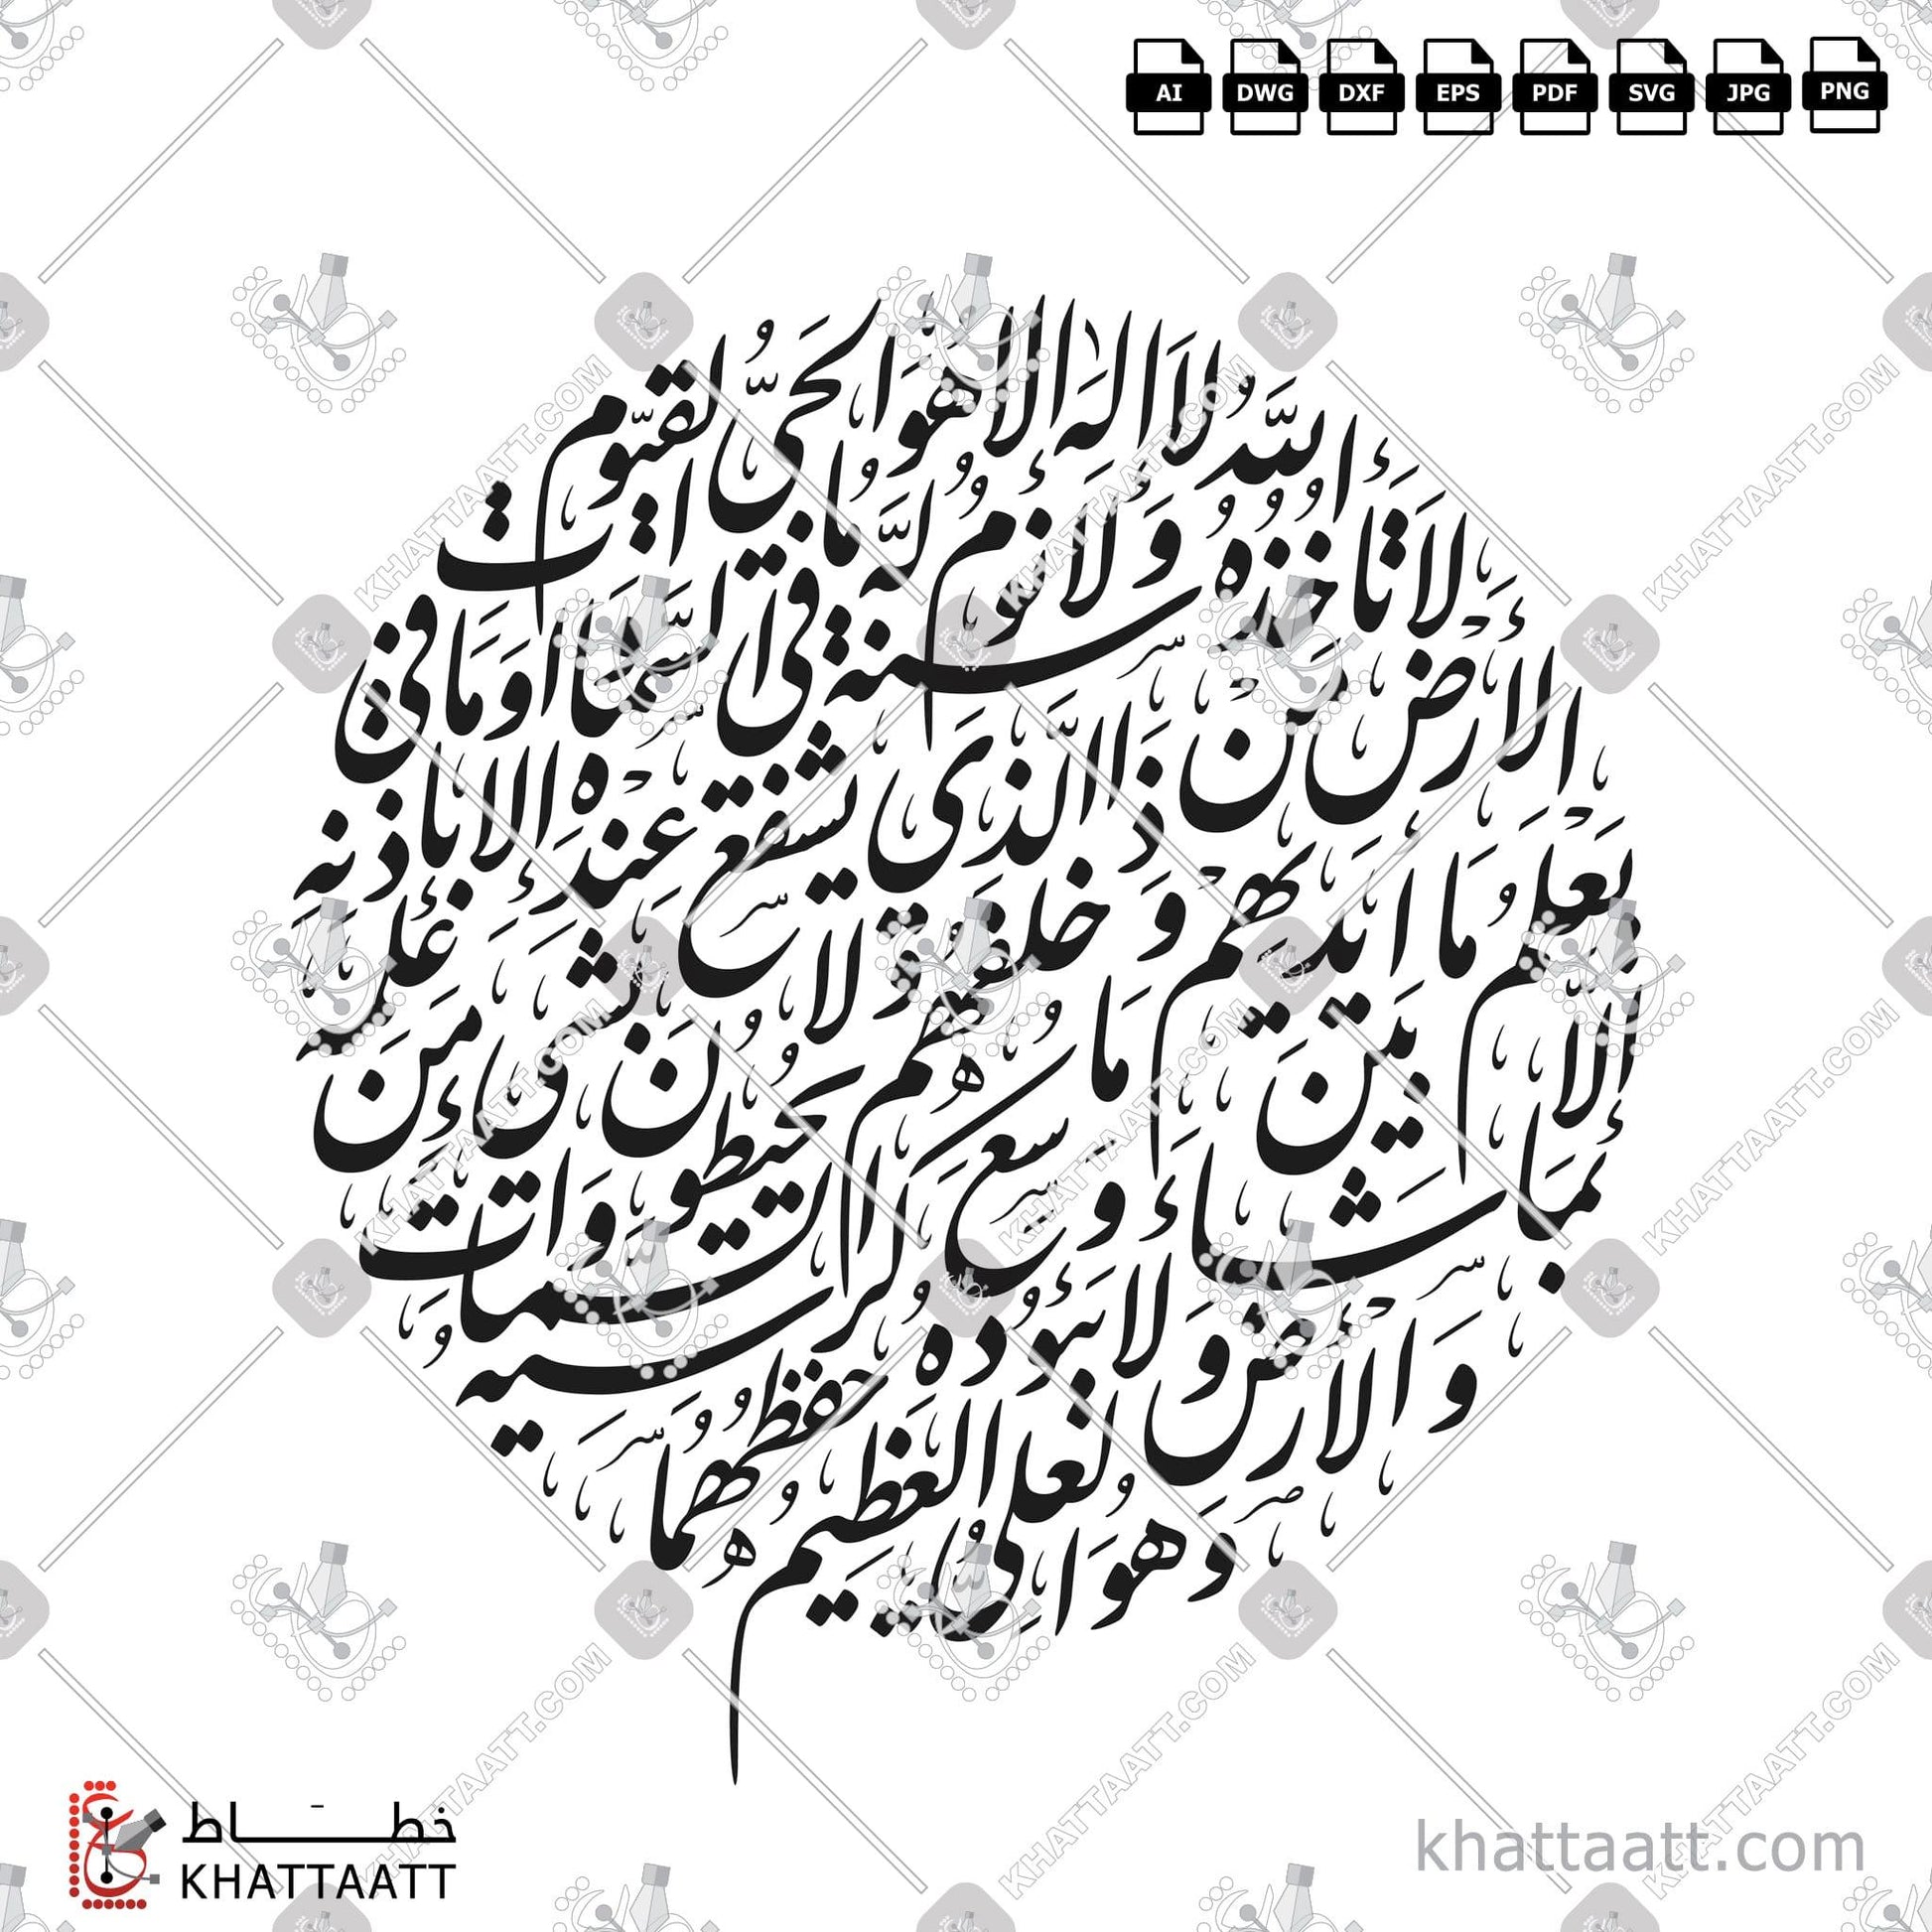 Download Arabic Calligraphy of Ayatul Kursi - آية الكرسي in Farsi - الخط الفارسي in vector and .png